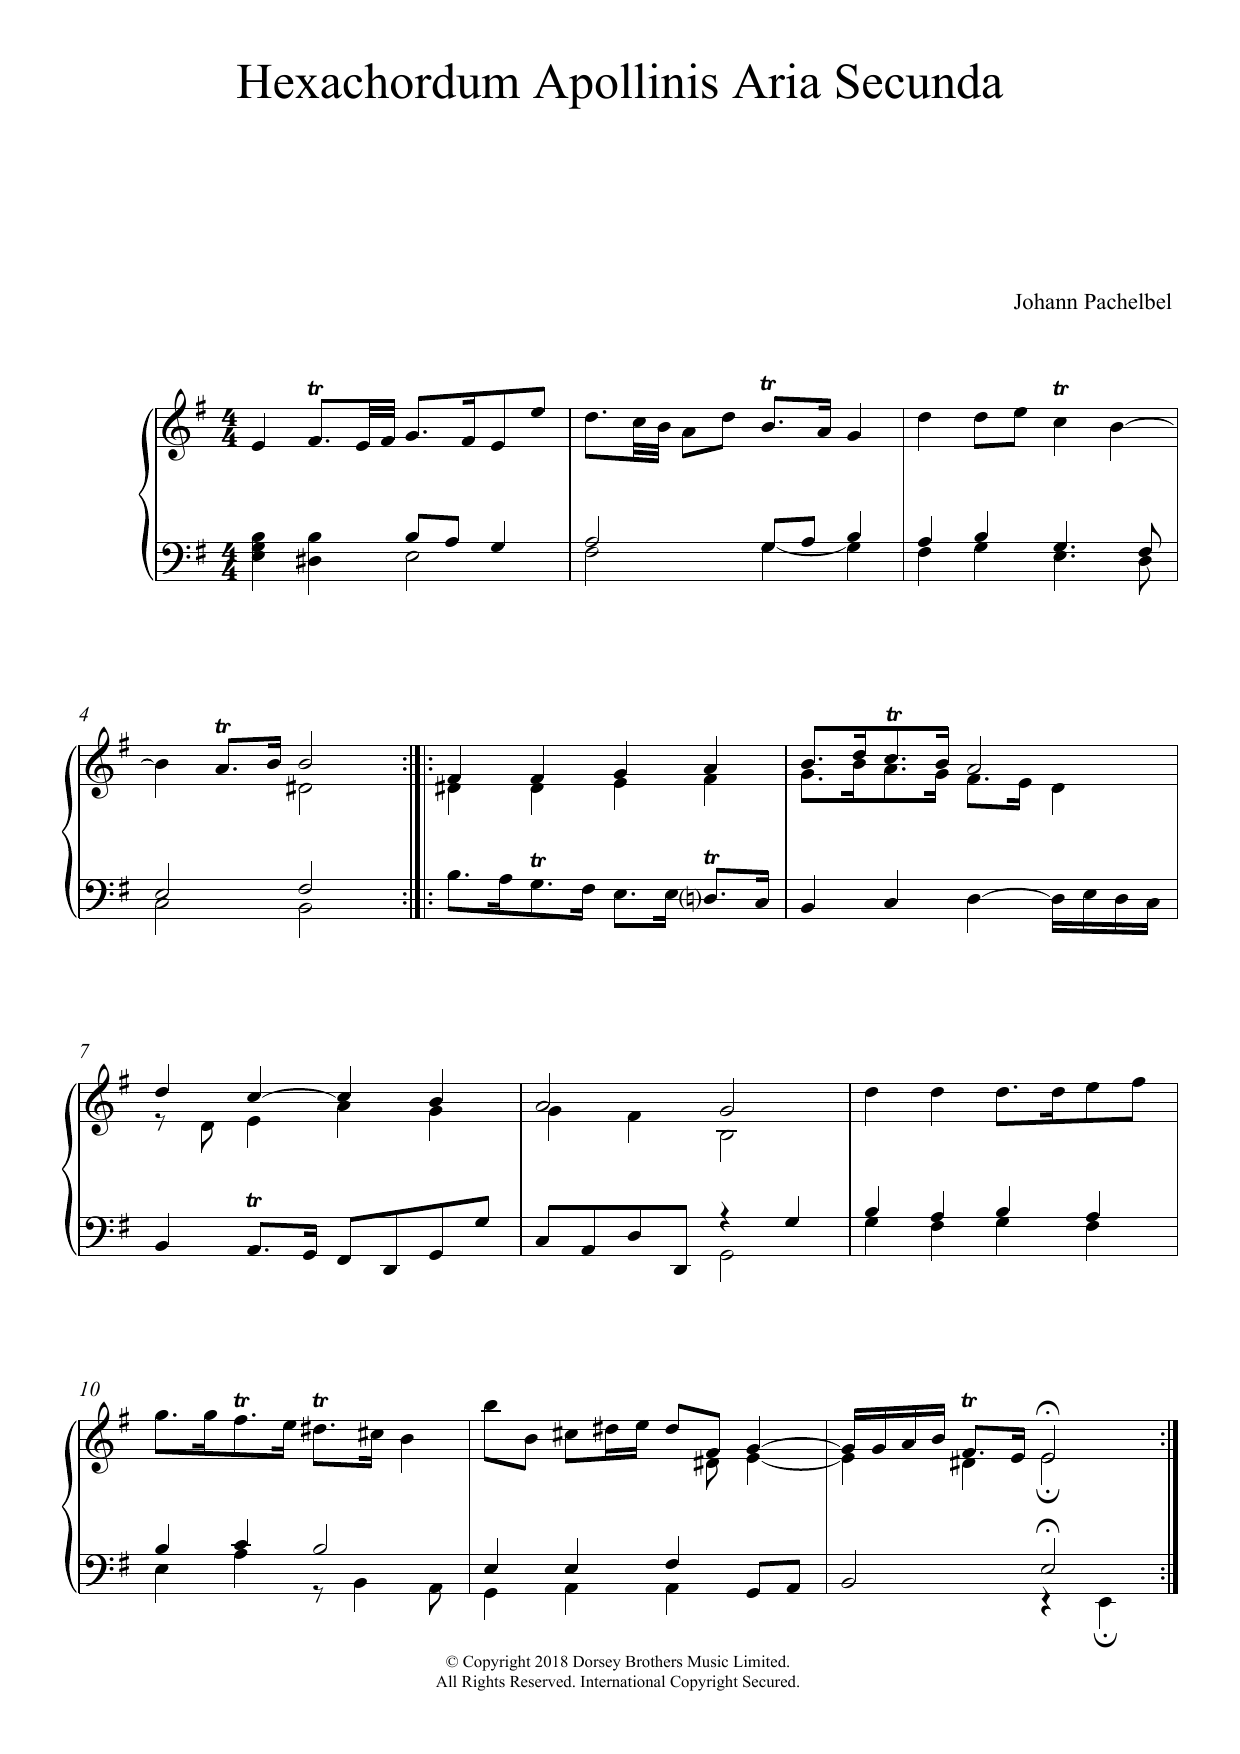 Johann Pachelbel Hexachordum Apollinis: Aria Secunda sheet music notes and chords arranged for Piano Solo